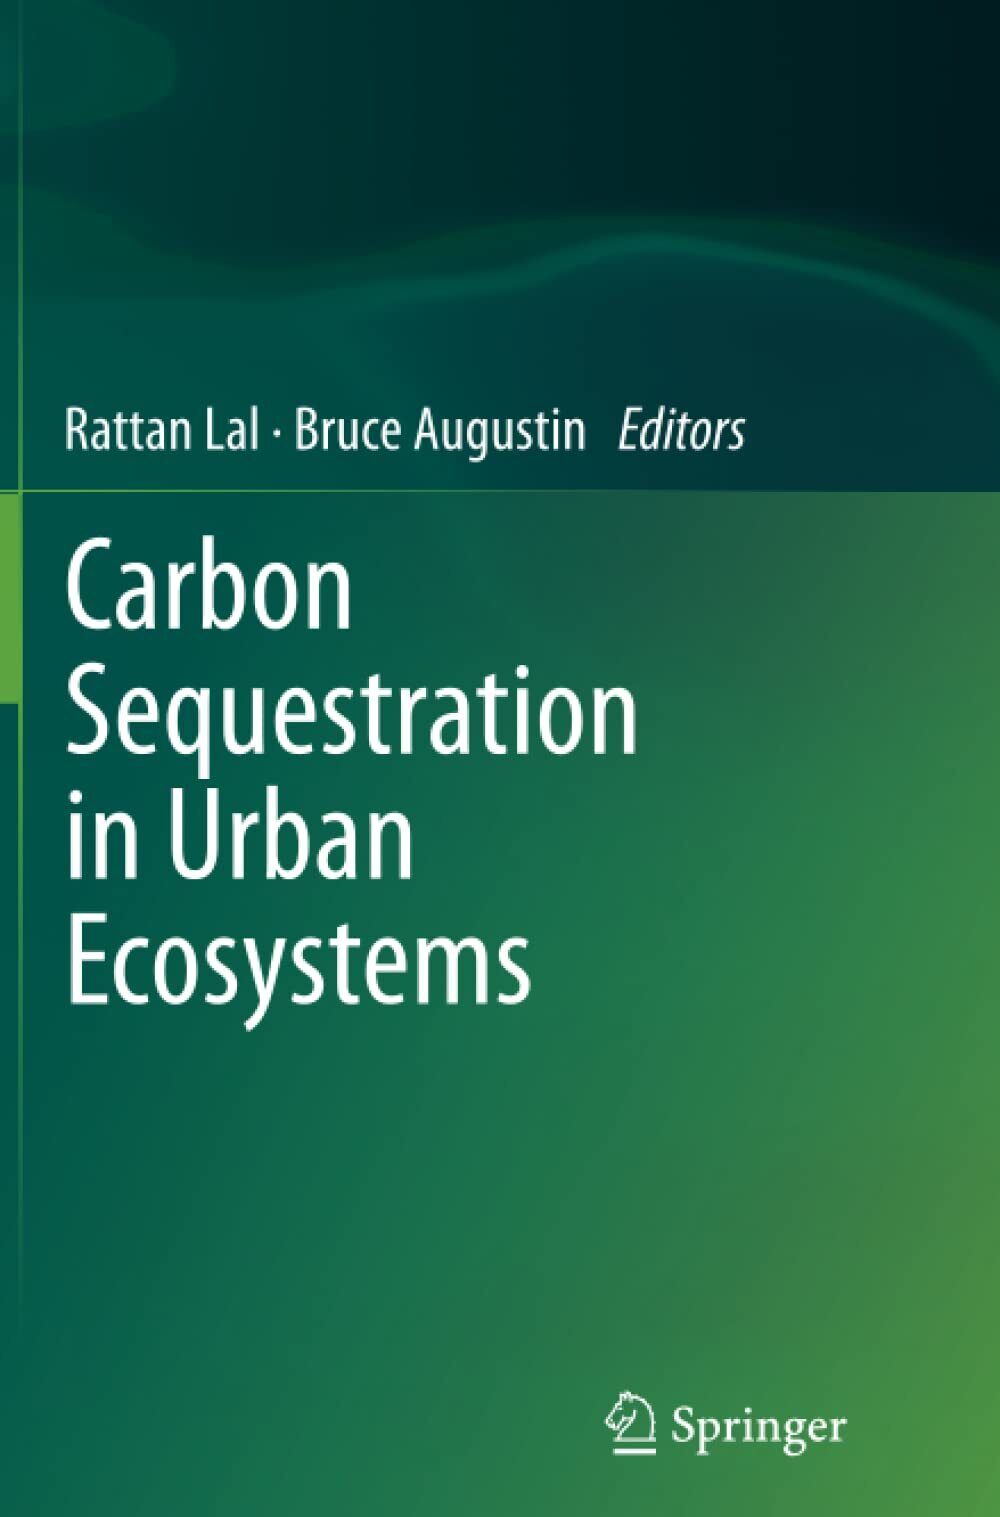 Carbon Sequestration in Urban Ecosystems - Rattan Lal - Springer, 2014 libro usato